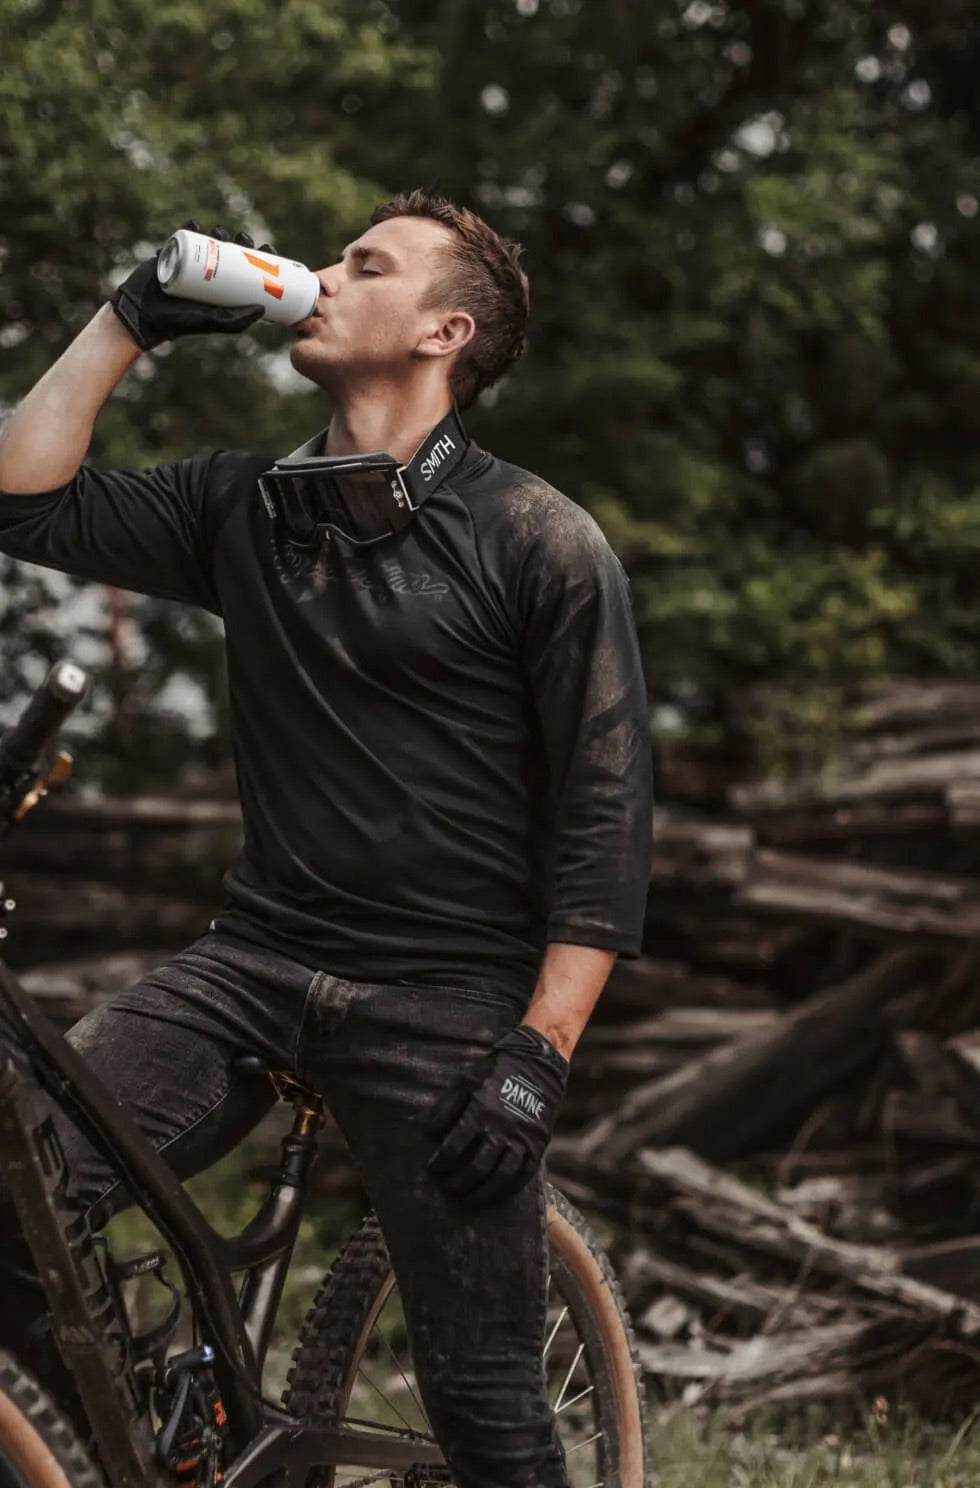 Energy Drink while dirt biking (Male)